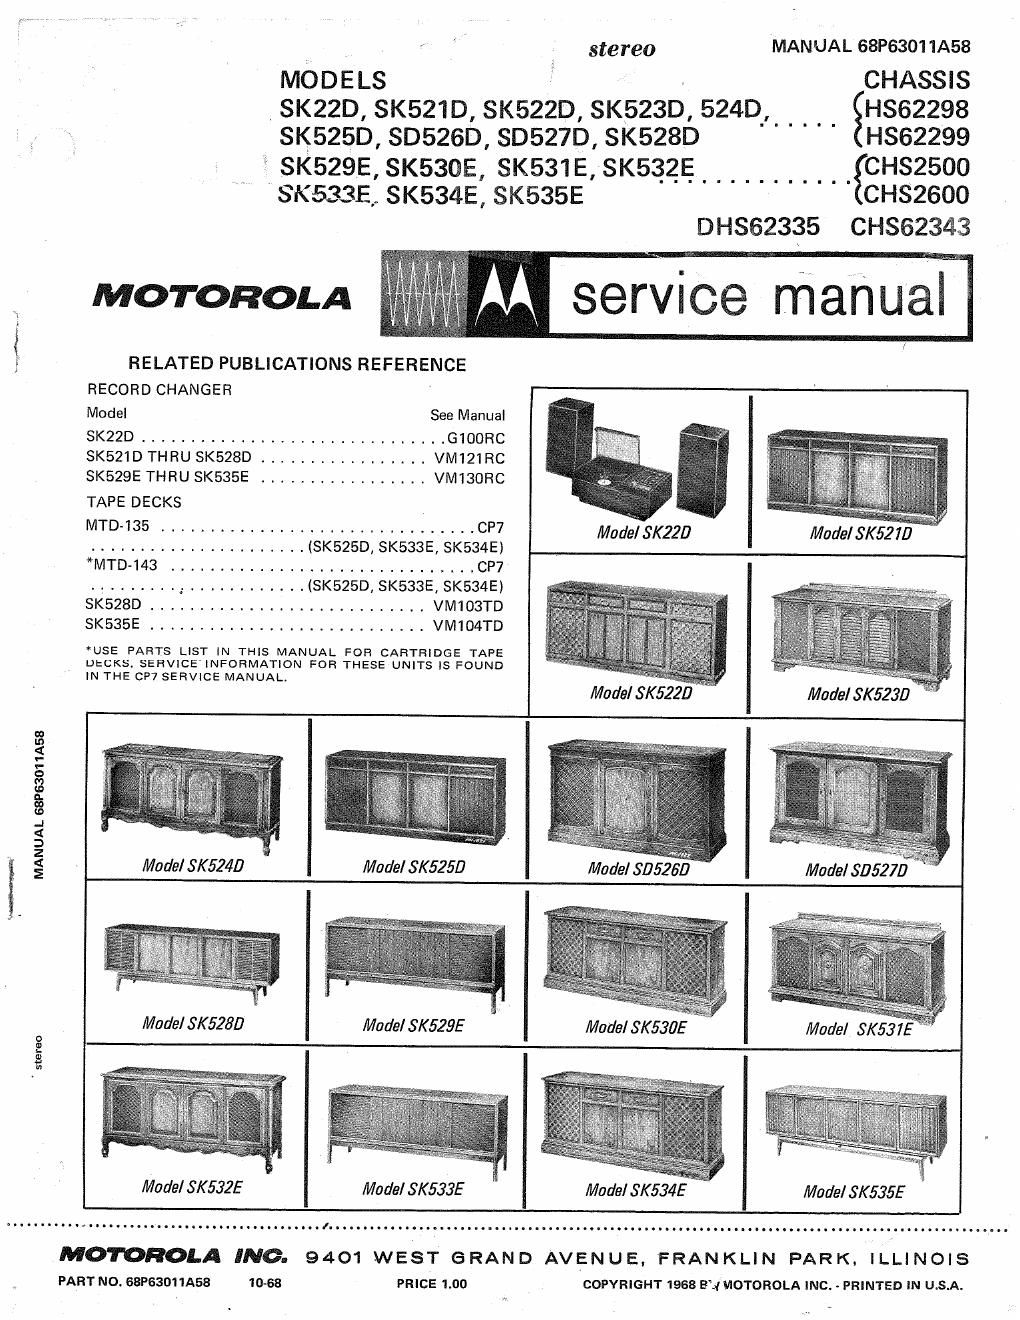 motorola sk 531 e service manual